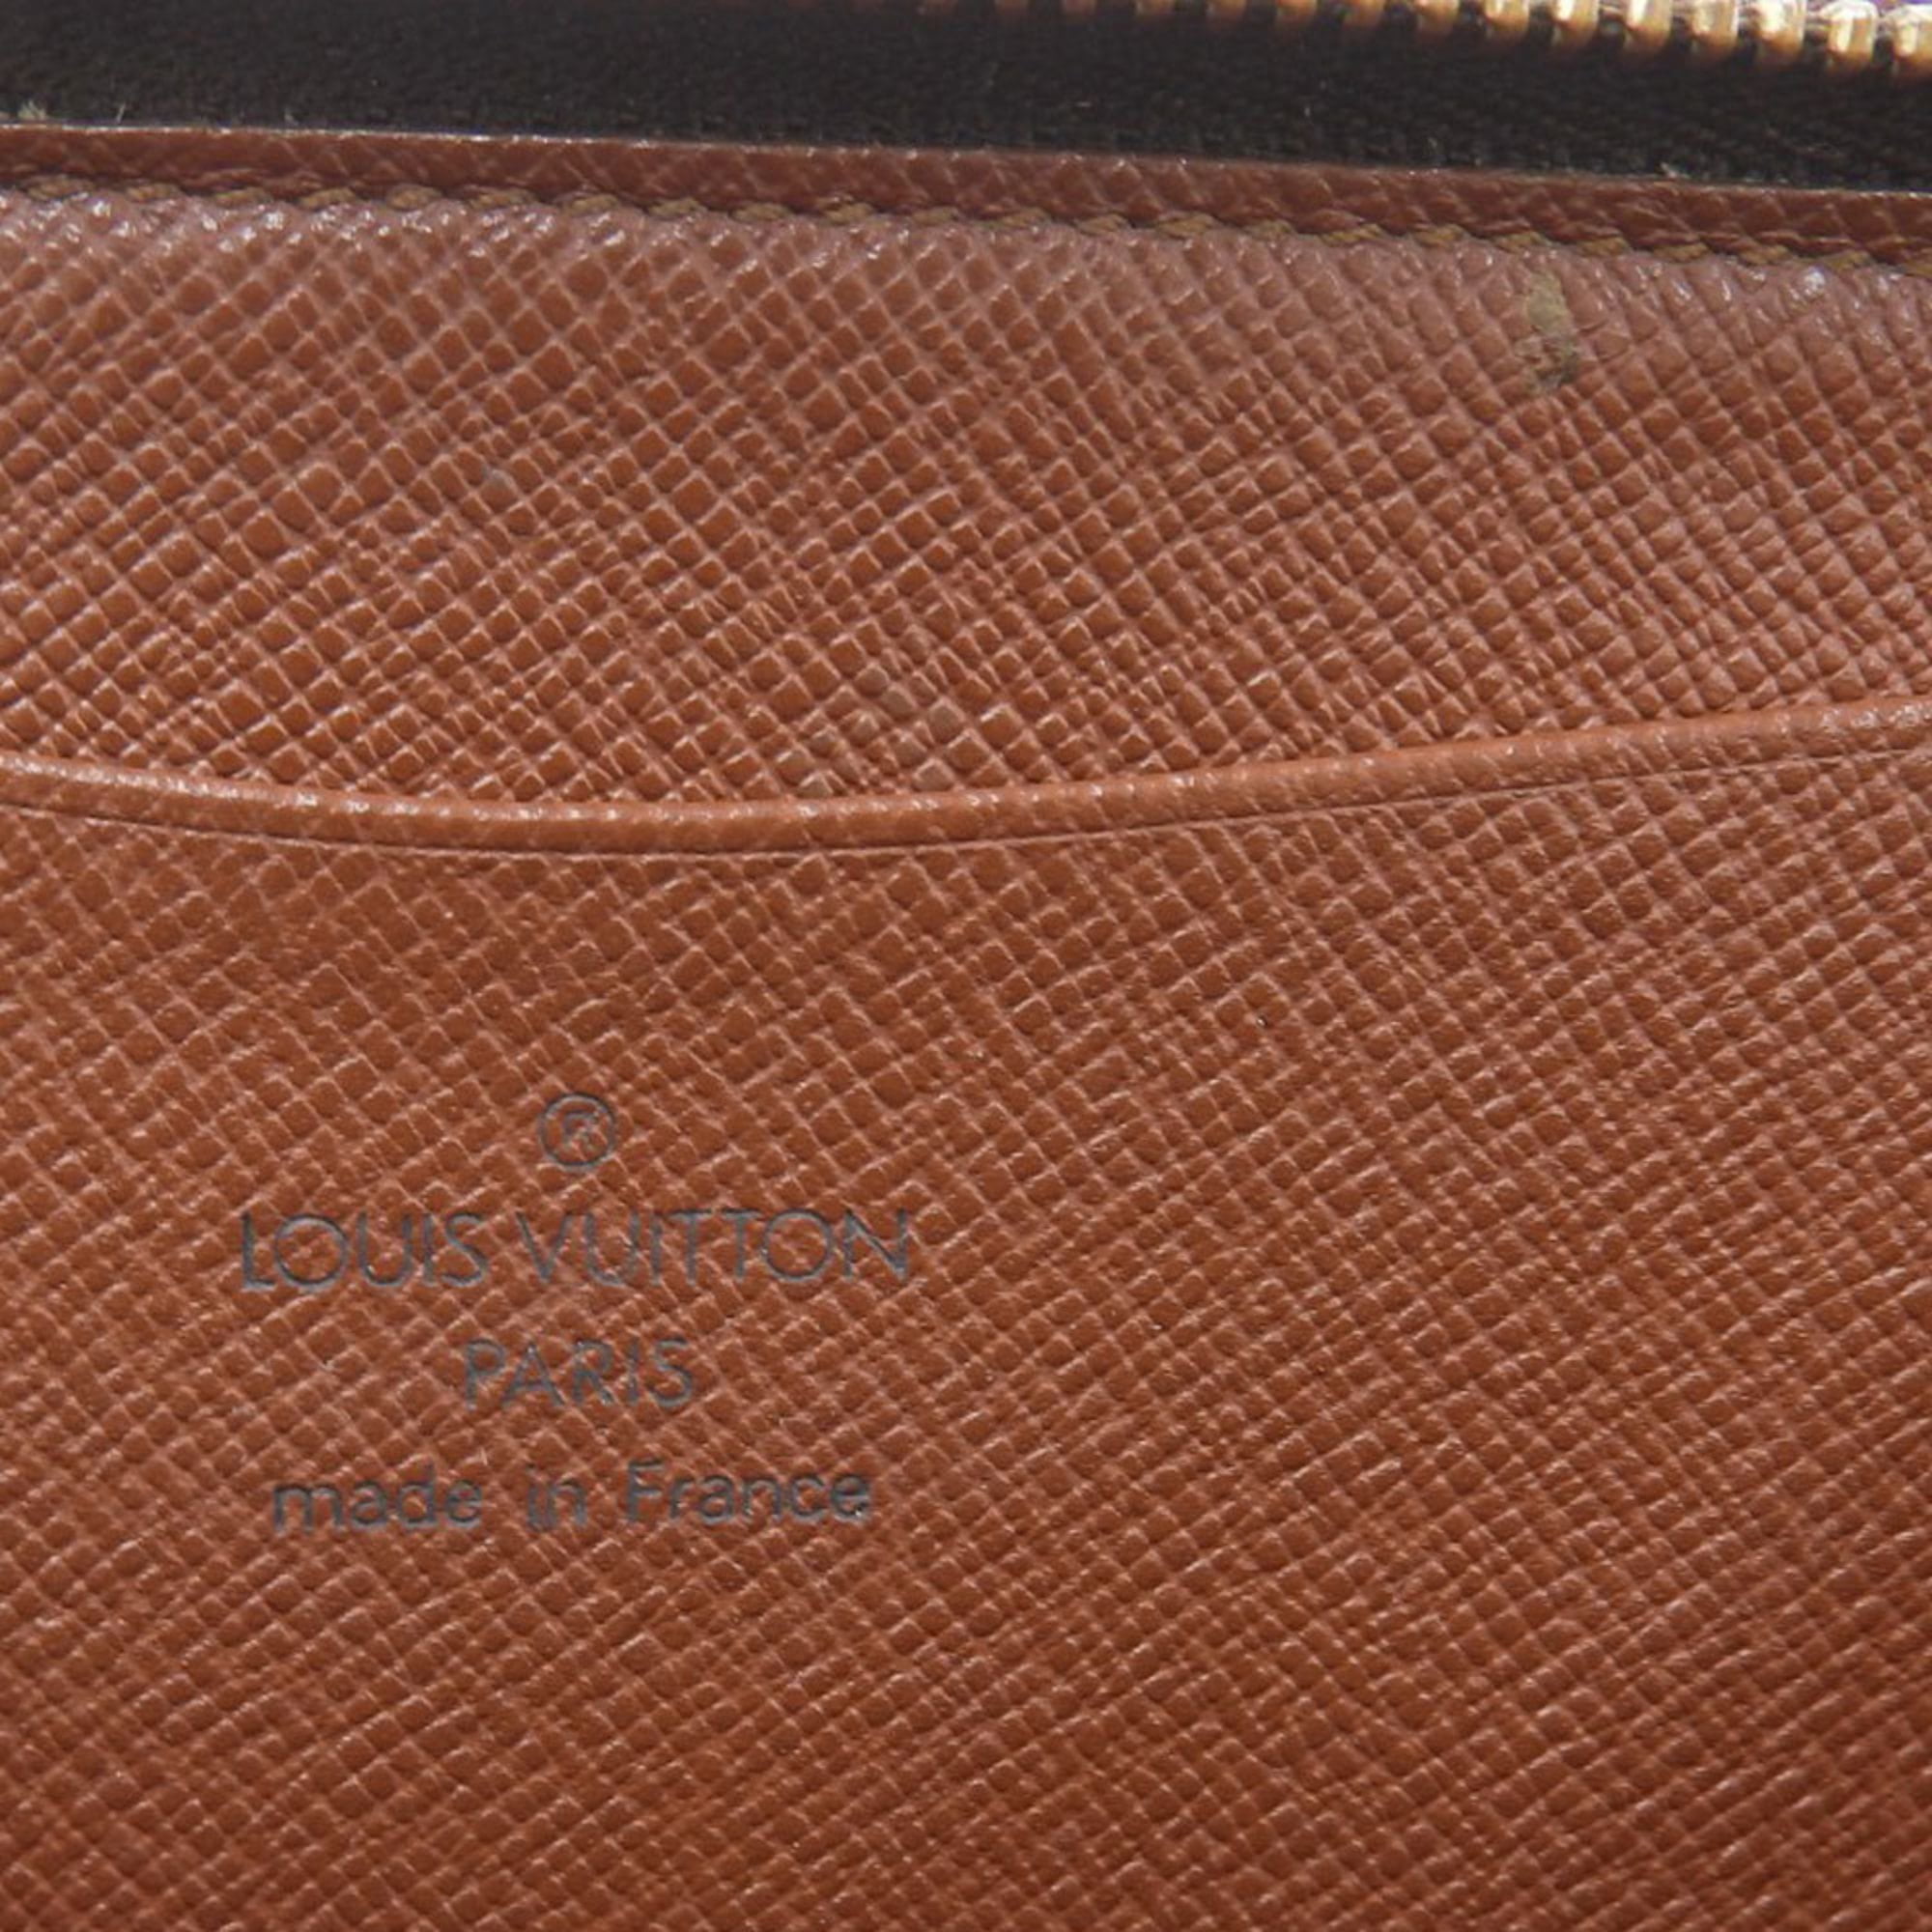 Louis Vuitton Monogram Portumone Zip M61727 Wallet Long Unisex